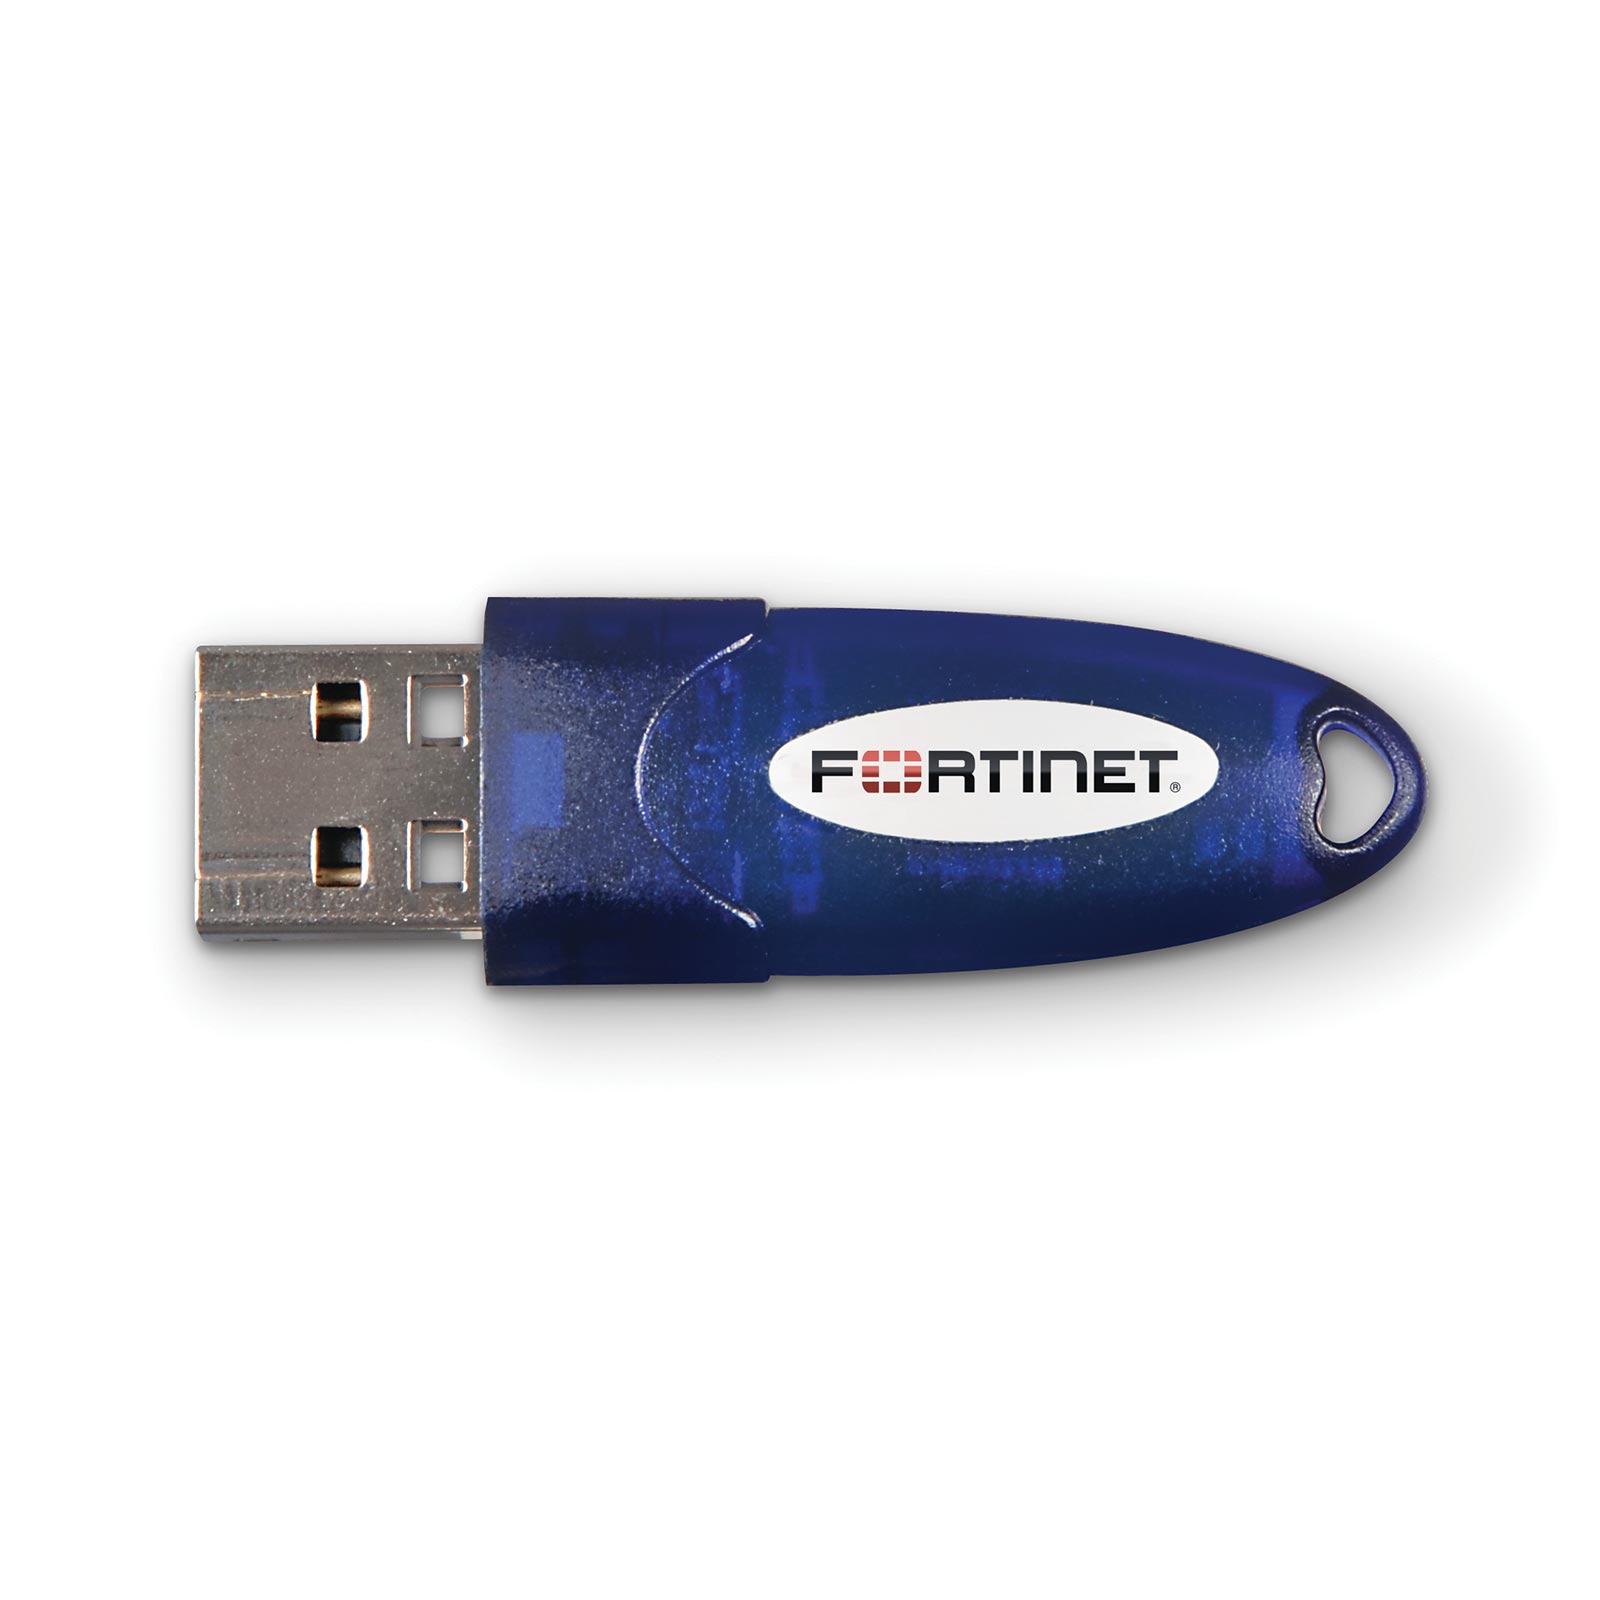 Usb токен купить. FORTITOKEN. USB токен. Желтый USB токен. Сертифицированный носитель USB токен для ФНС купить.